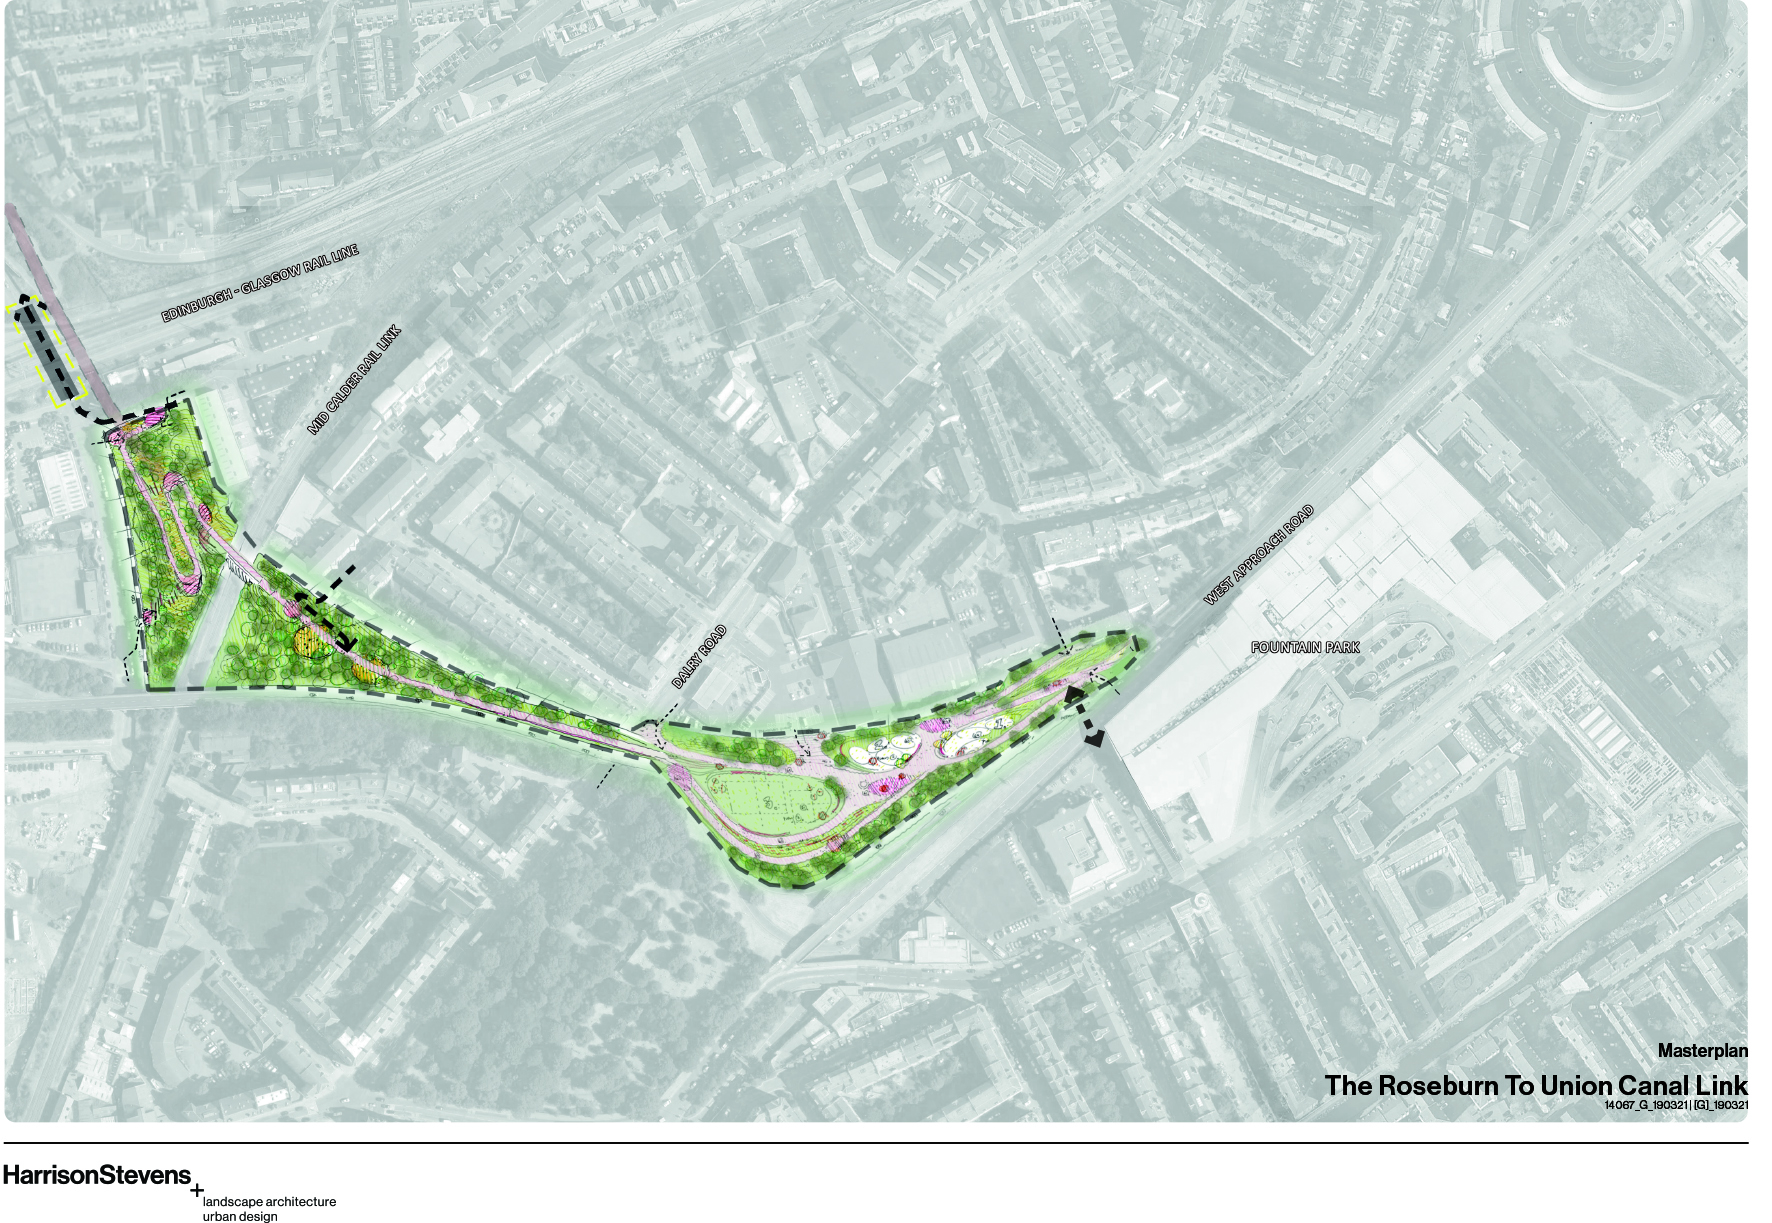 Work begins on new ‘green corridor’ between Roseburn and Union Canal